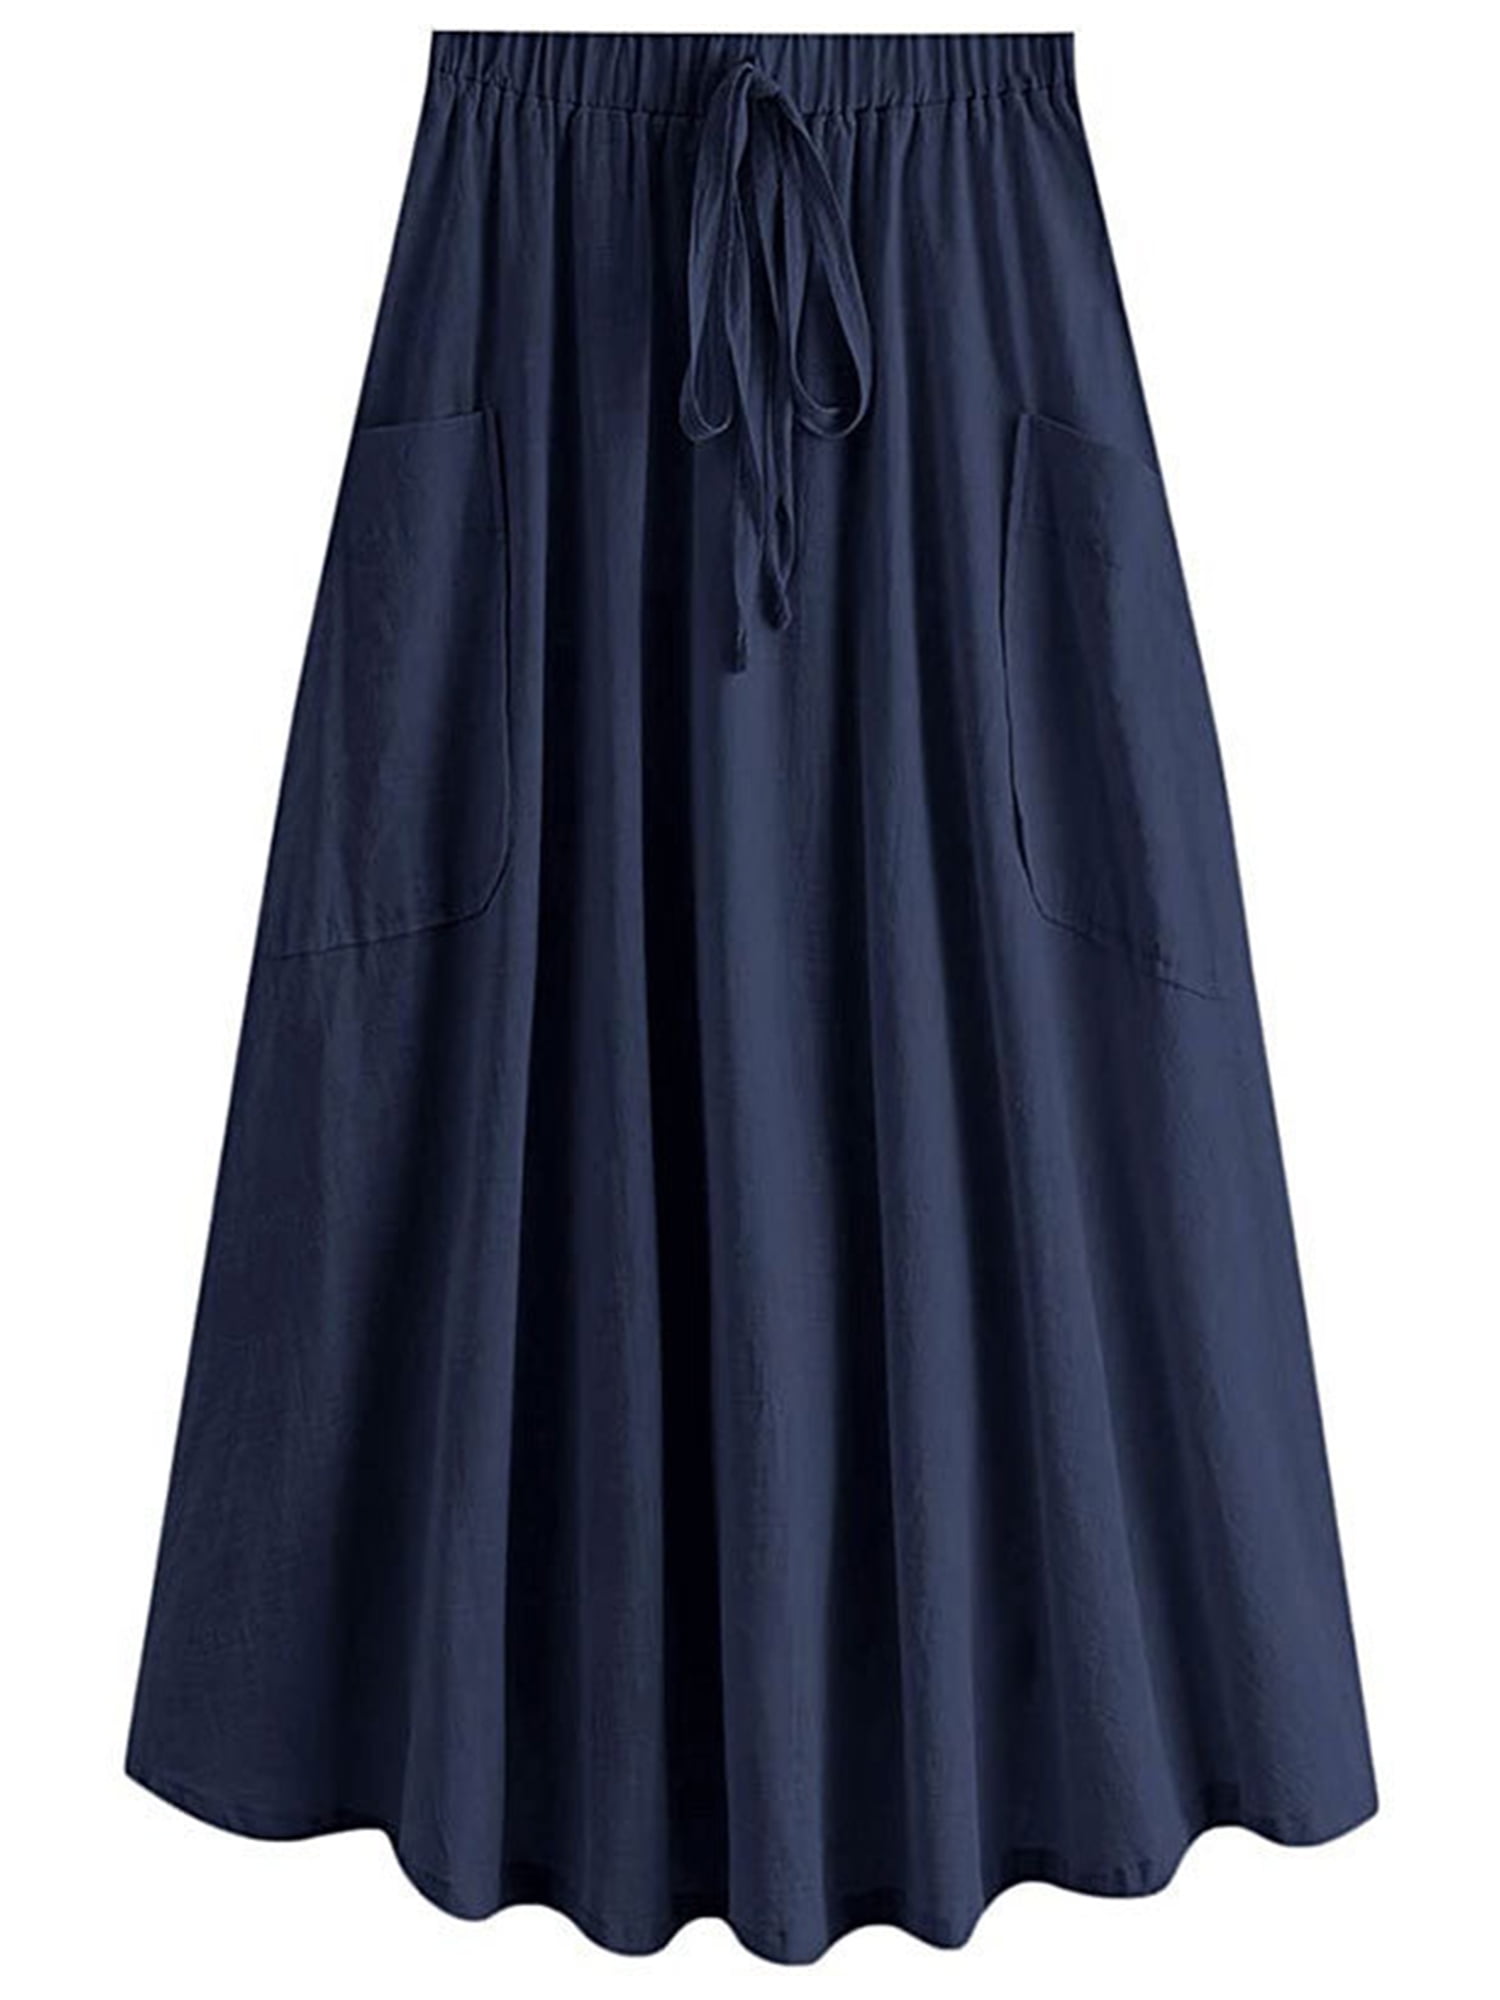 Capreze Women Boho High Waist A-line Flowy Long Midi Skirt with Pockets ...